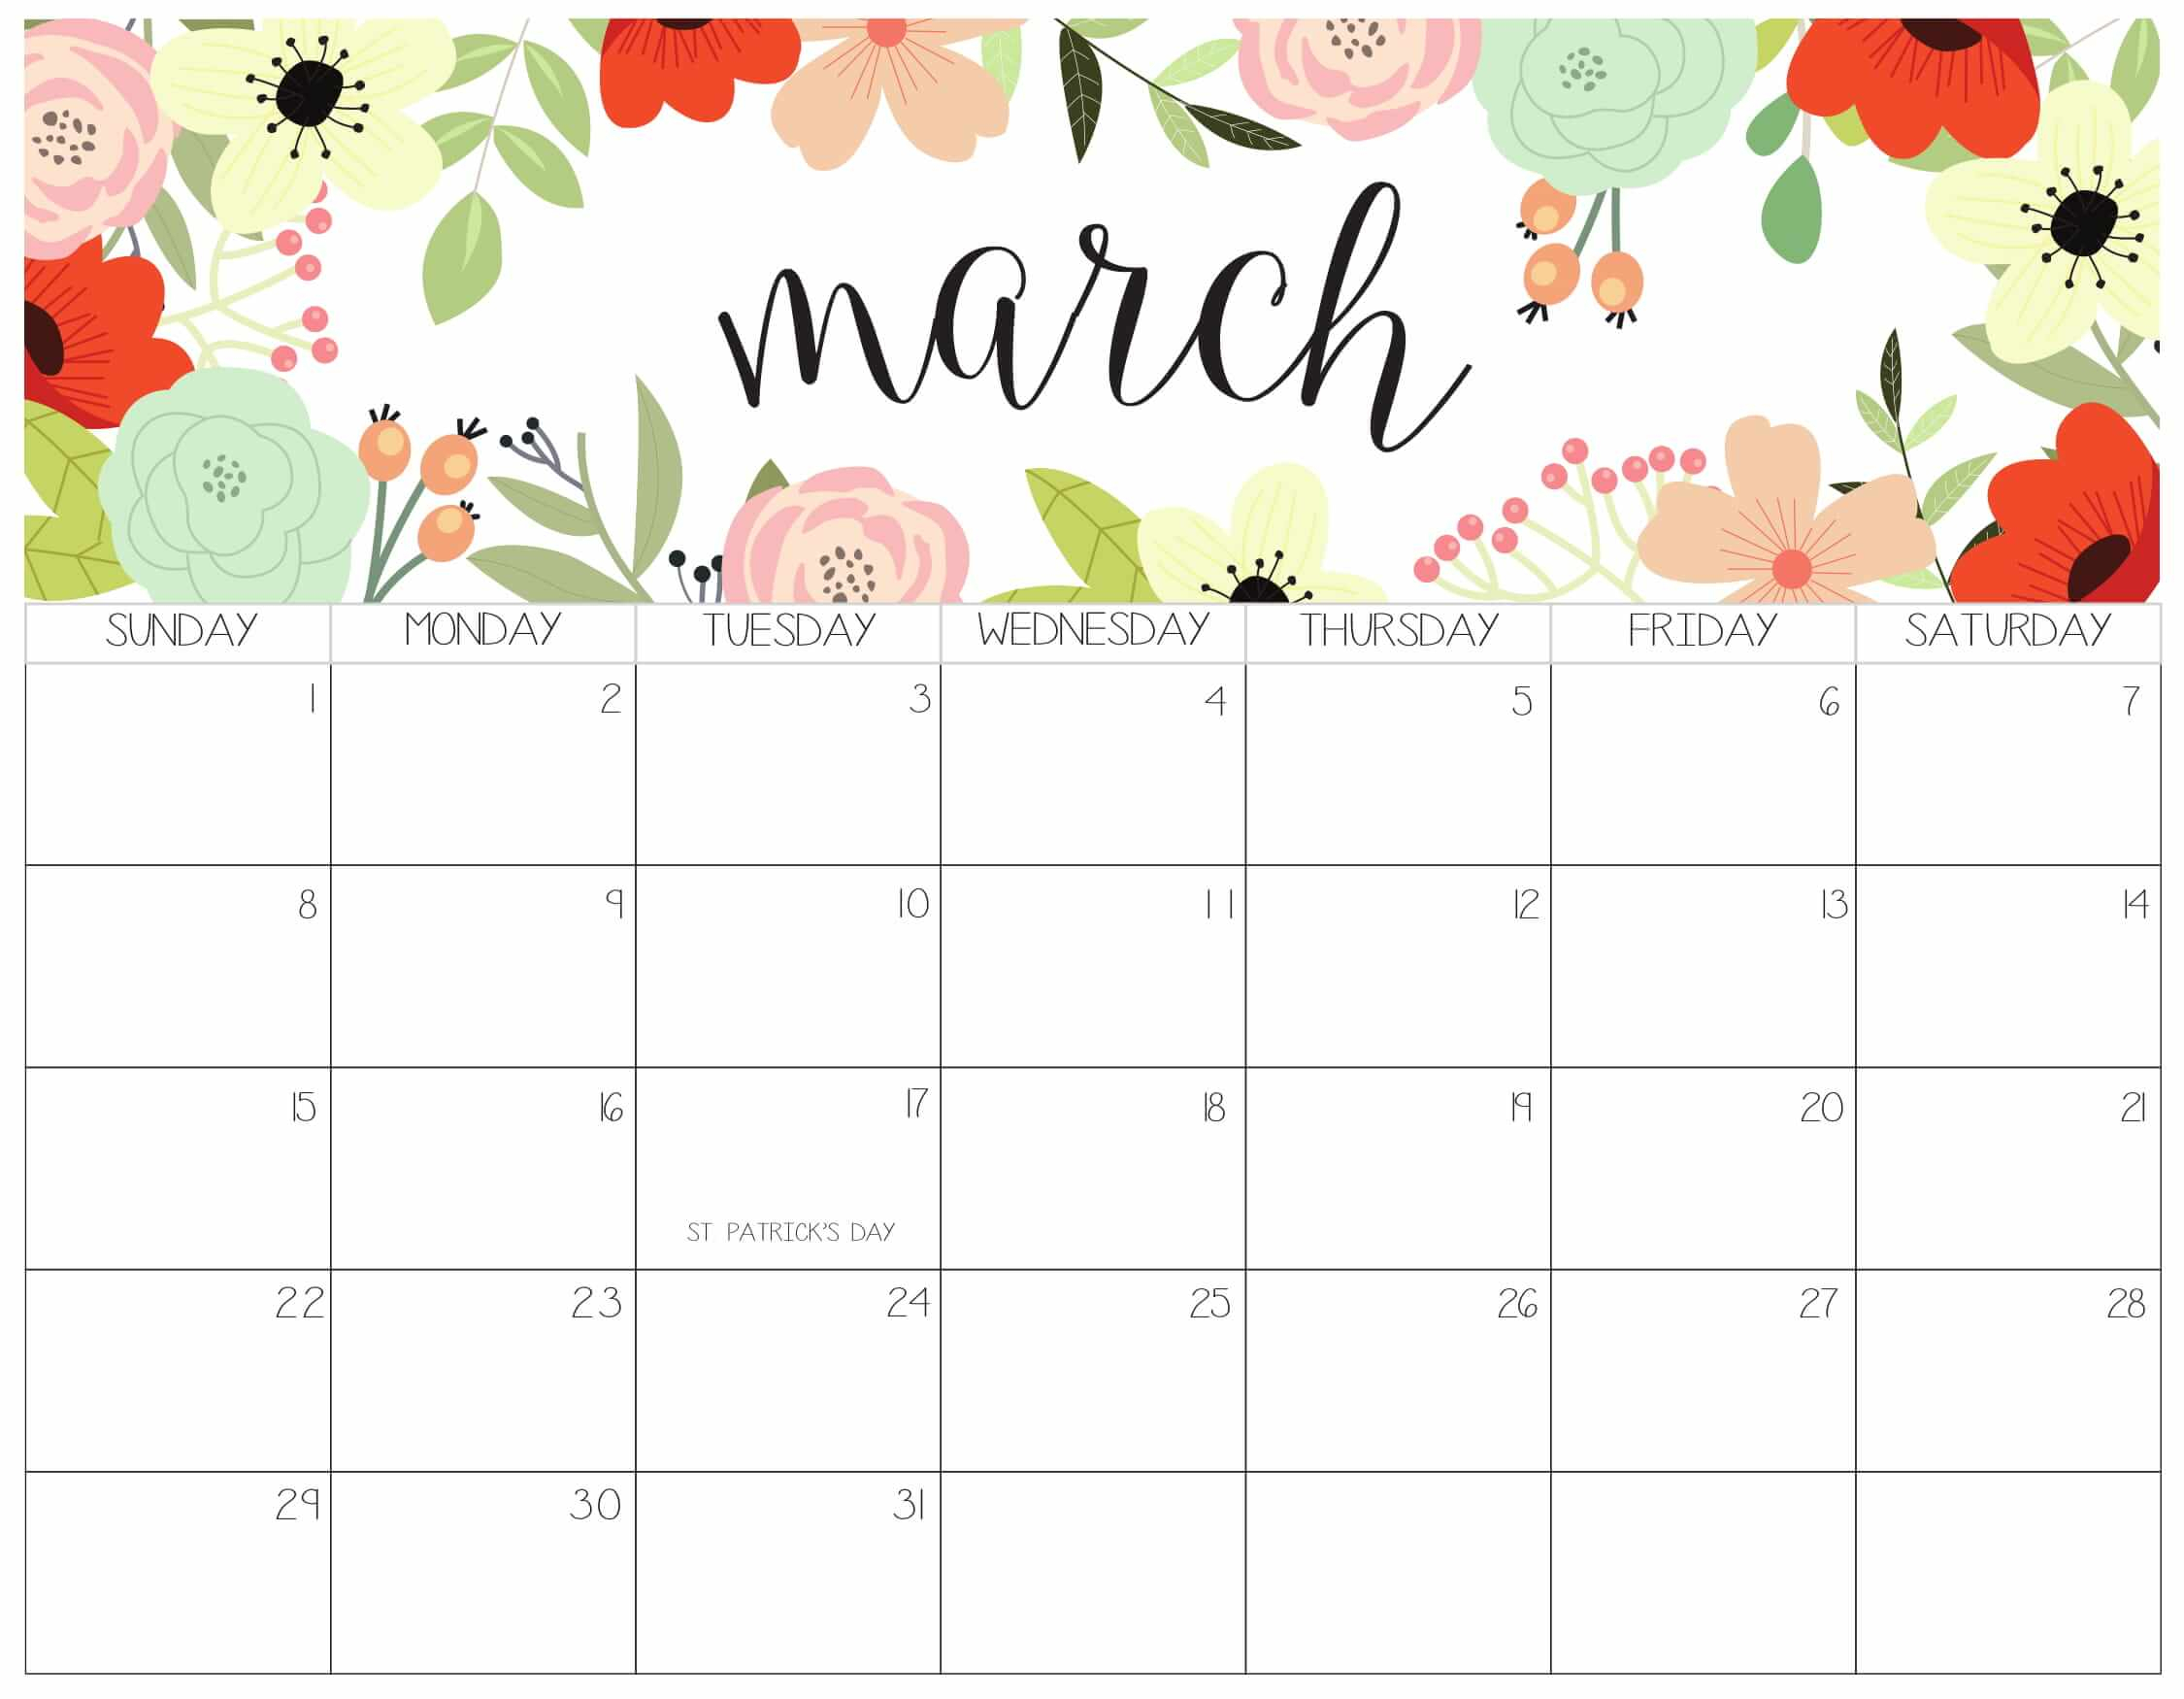 Take Calendar 2022 March Printable